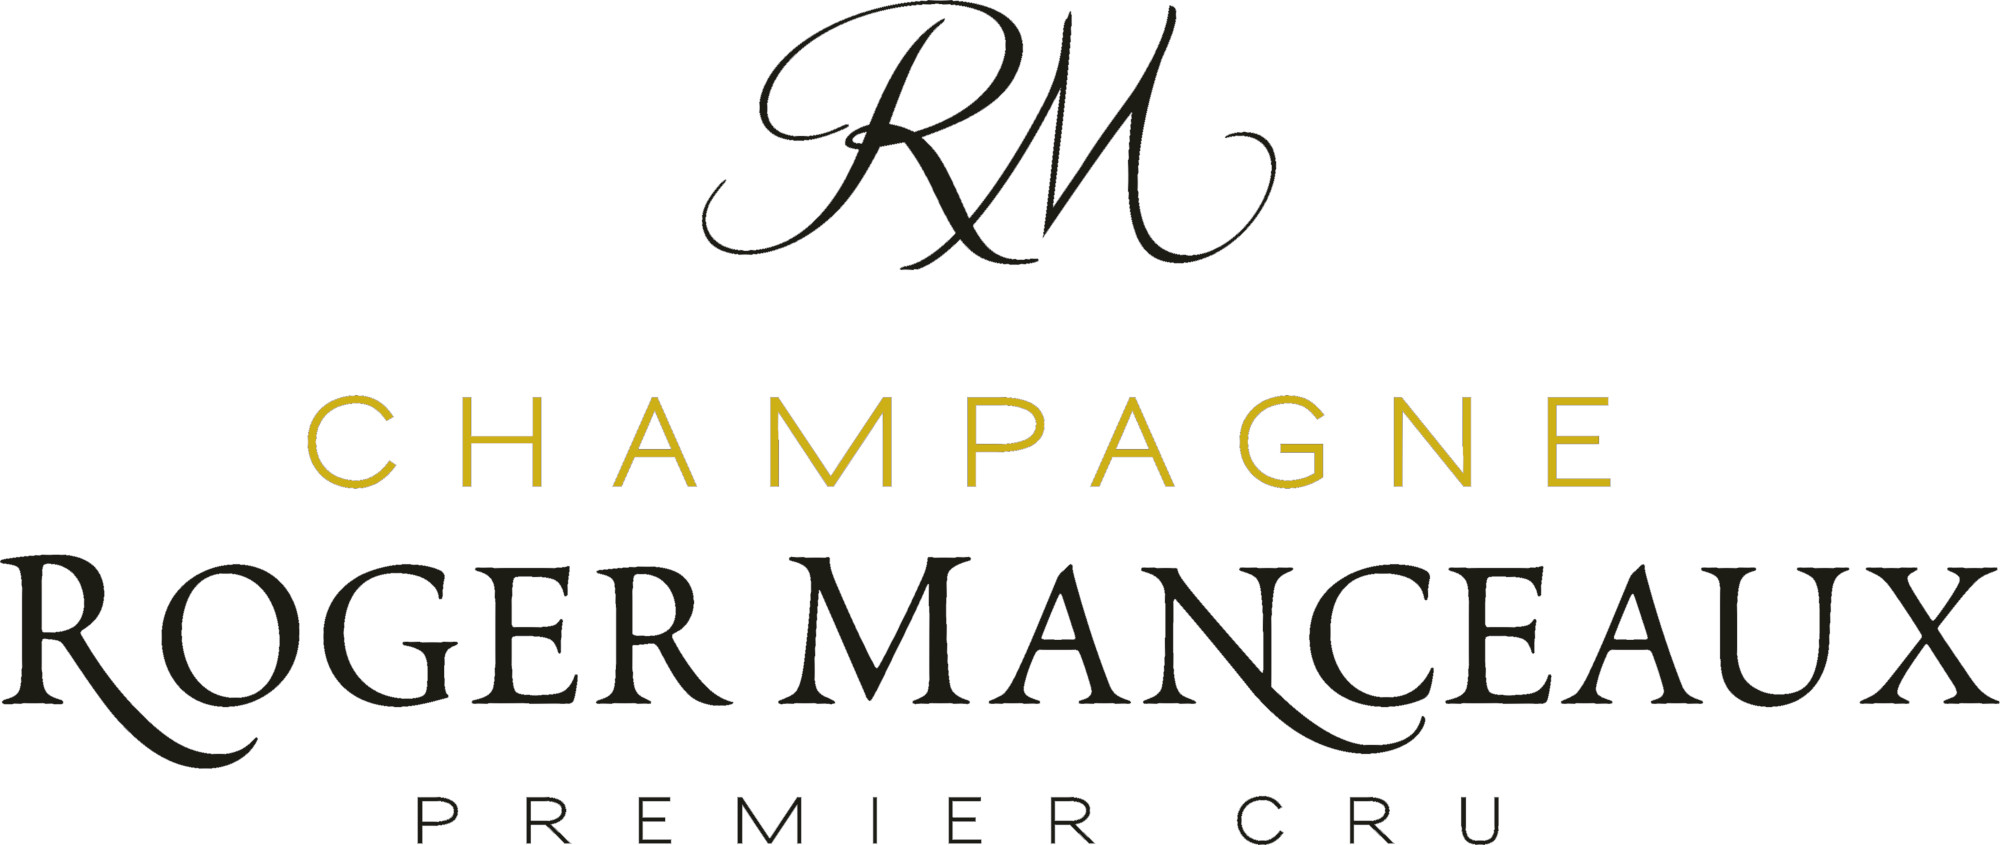 Champagne Roger Manceaux